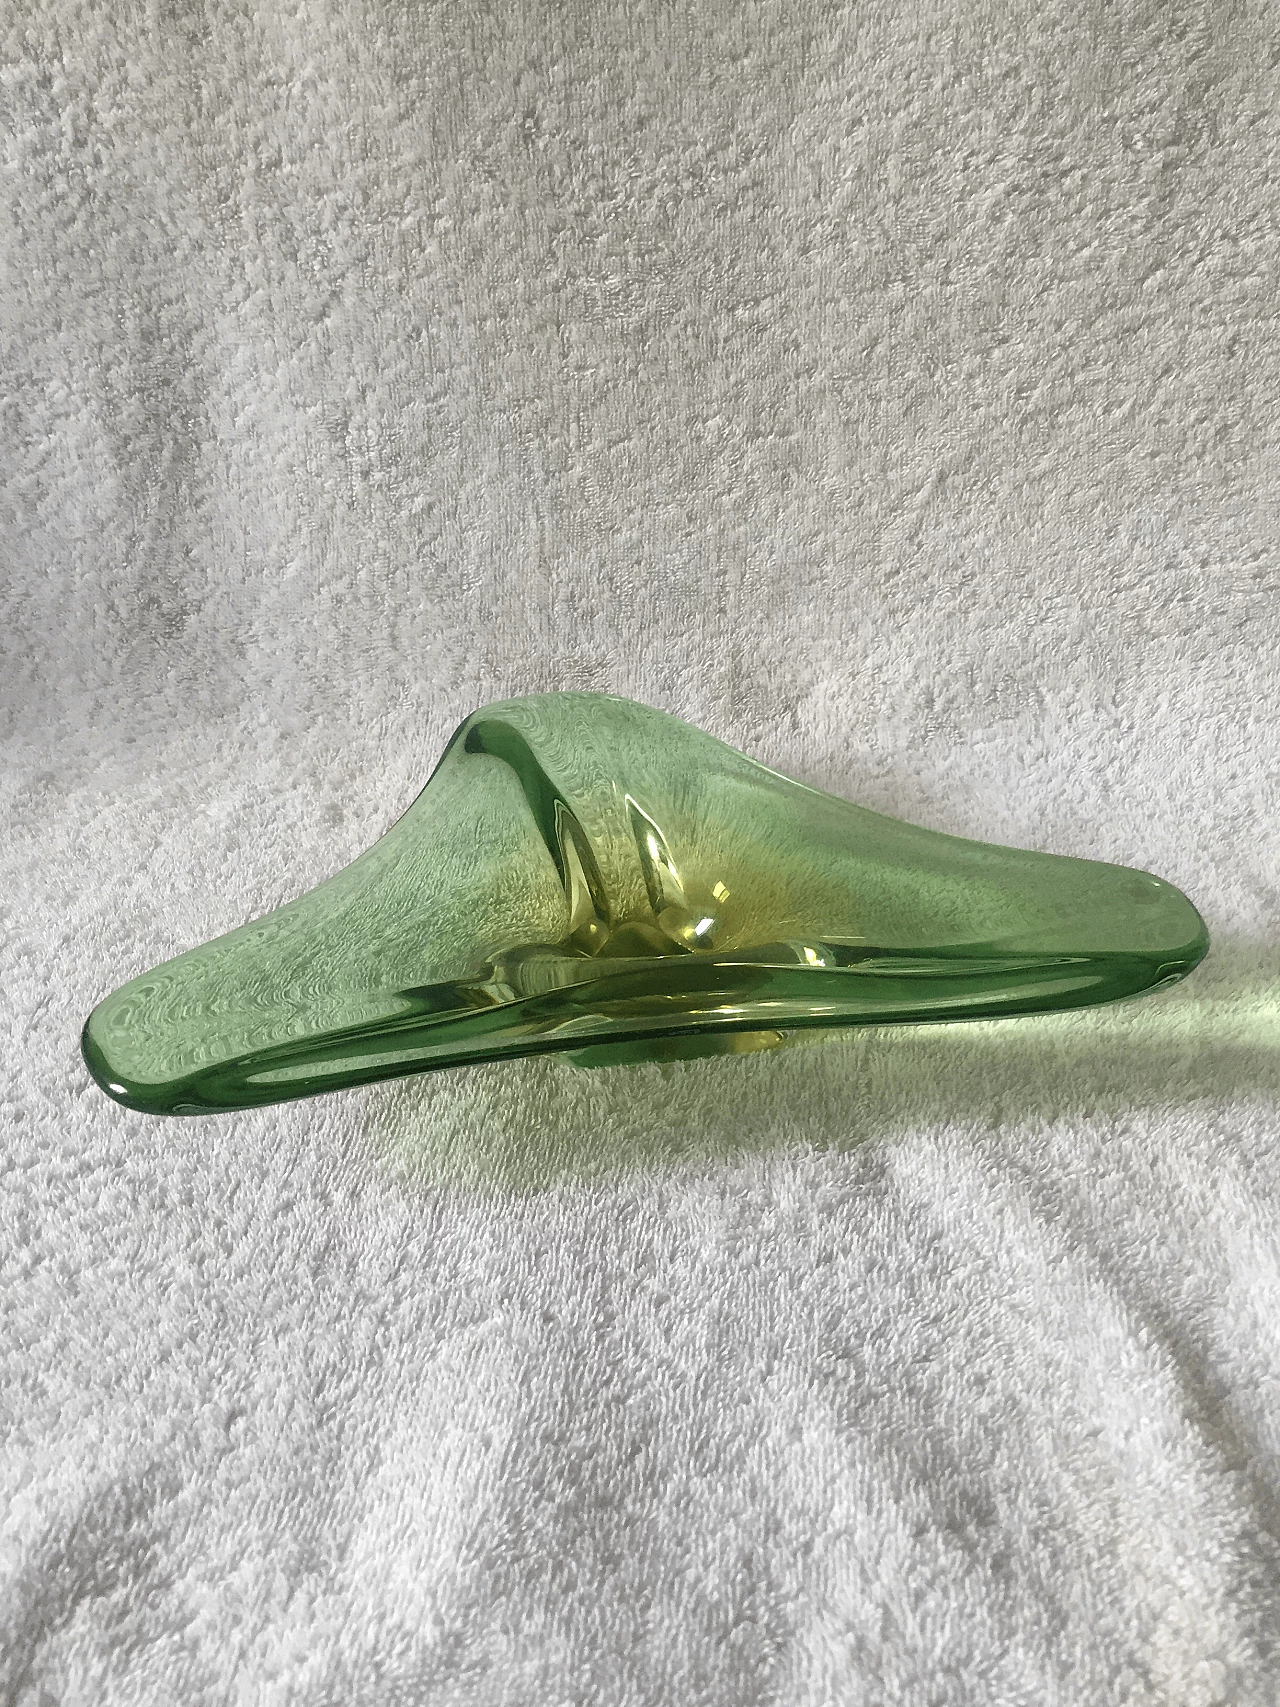 Seguso green Murano glass ashtray, 1970s 1367375